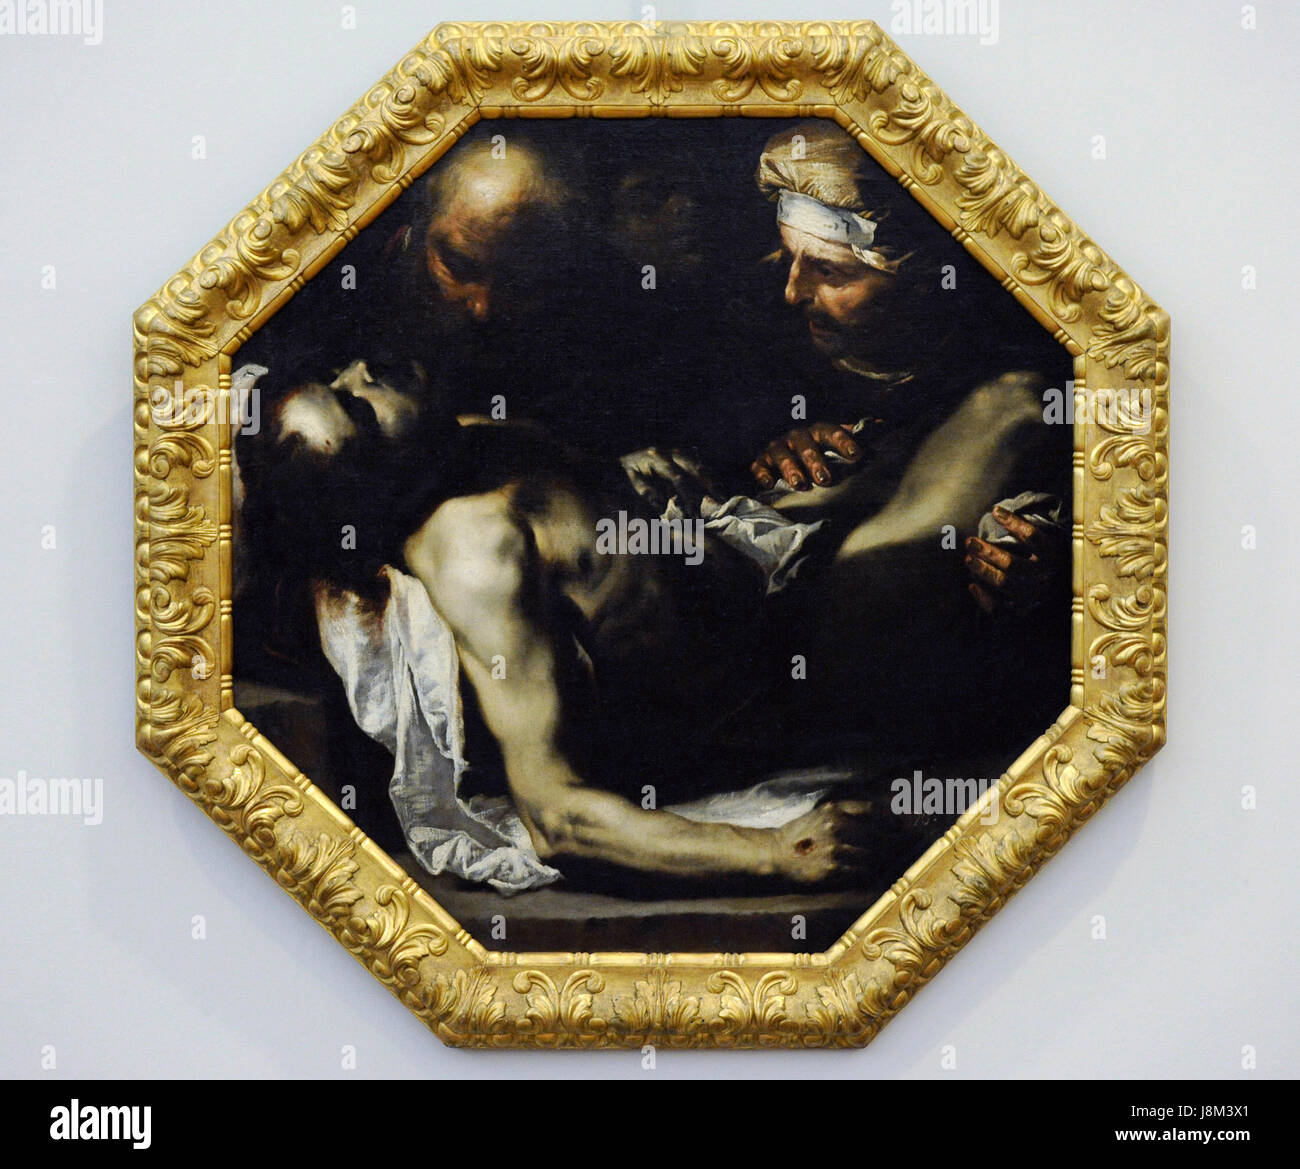 Luca Giordano (1634-1705). Italienischer Maler. Christus abgesetzt, 1663. Öl auf Leinwand. Nationales Museum von Capodimonte. Neapel. Italien. Stockfoto